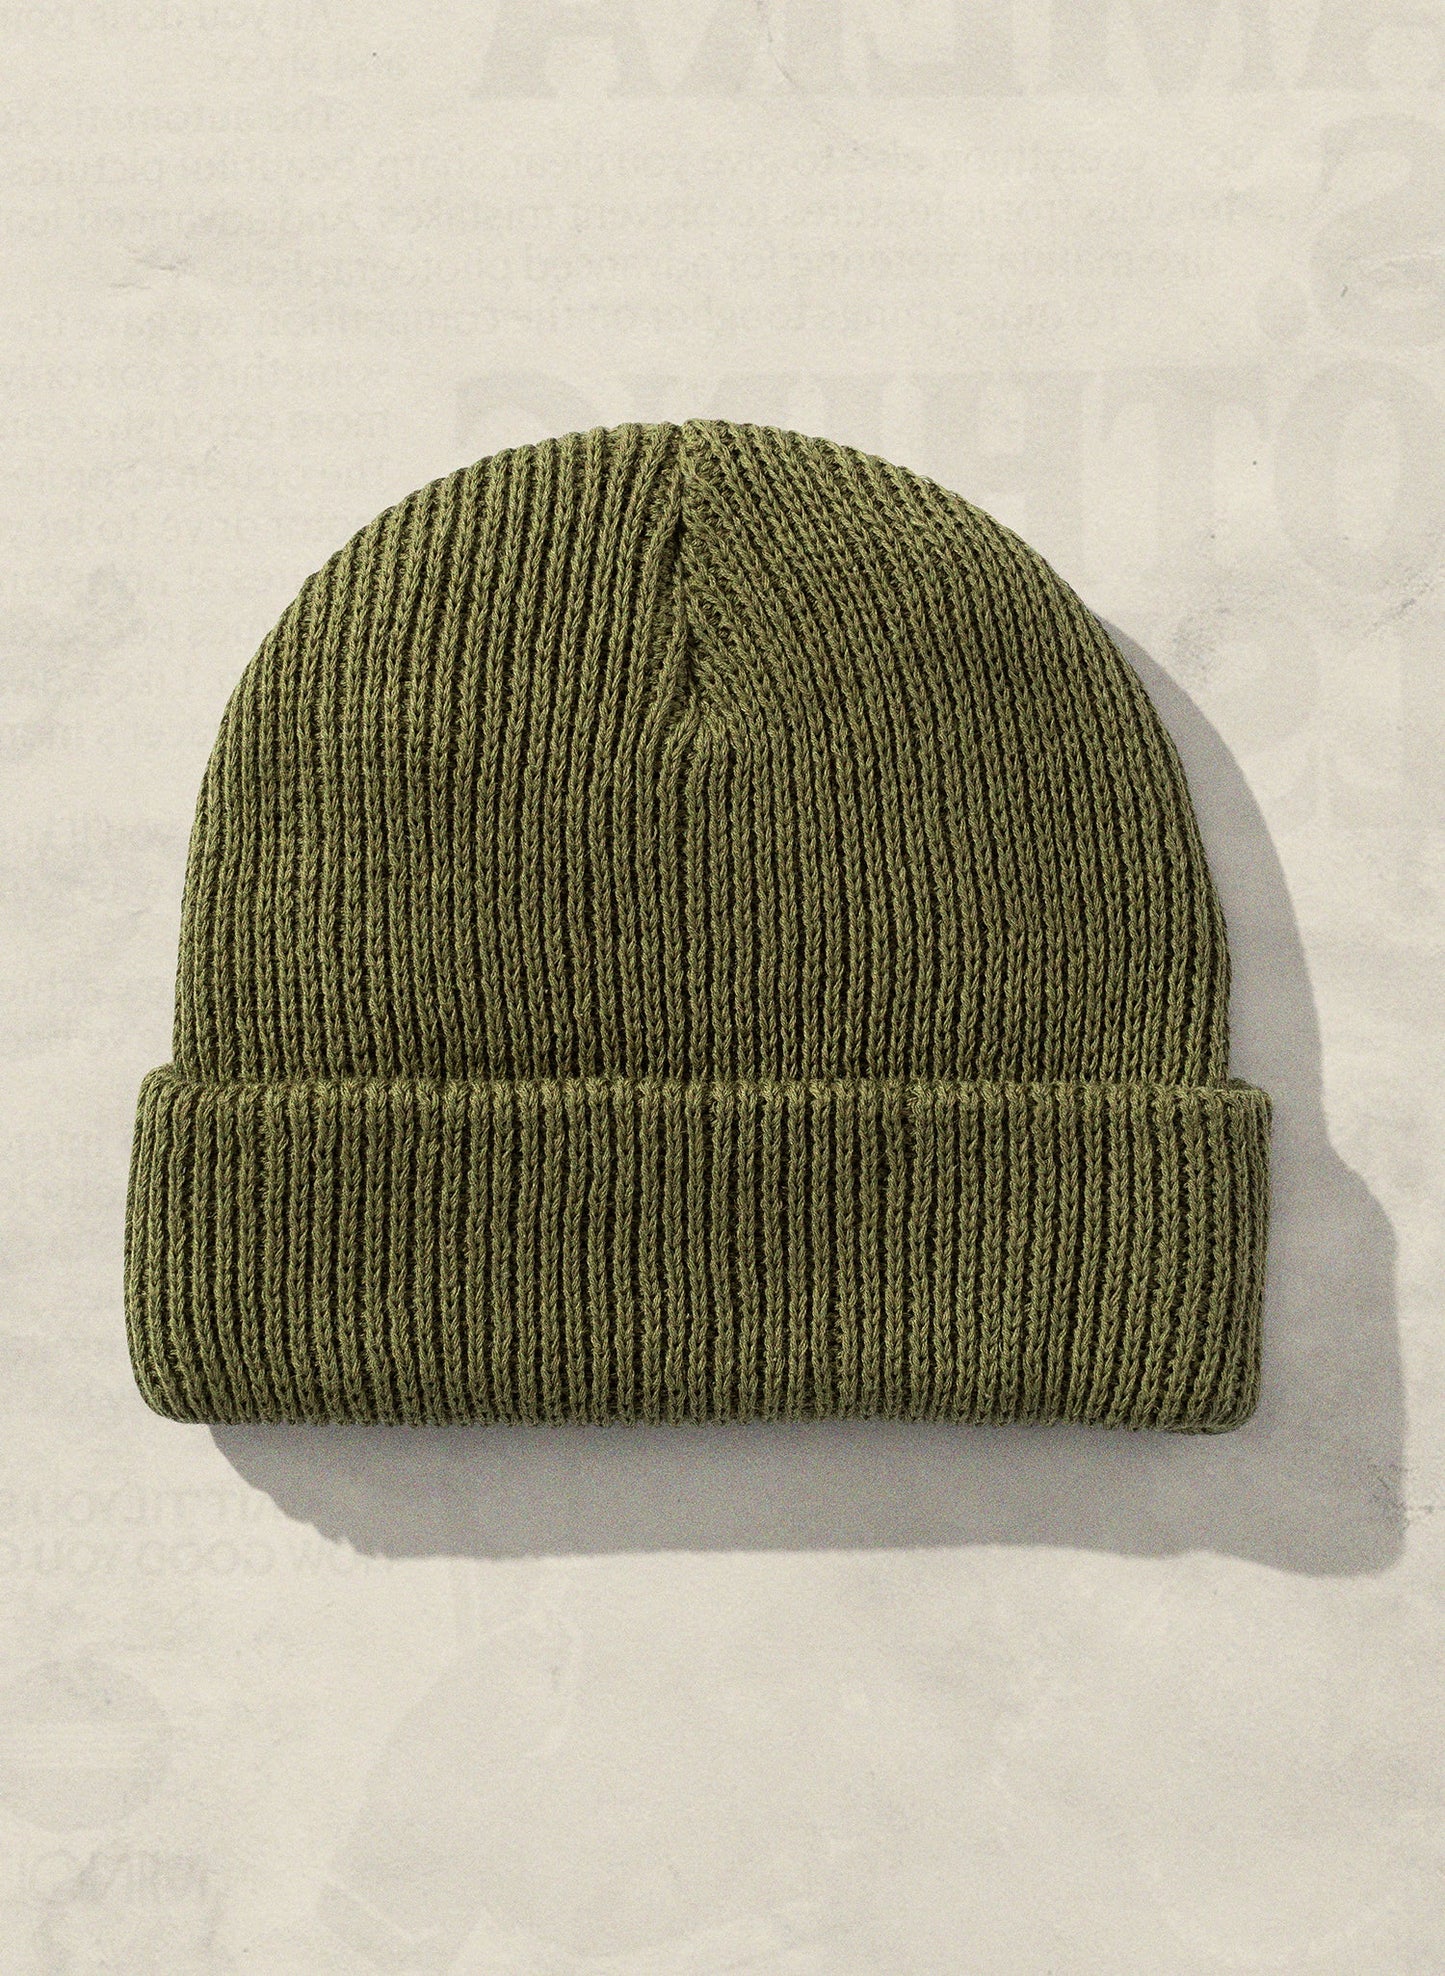 Weld Mfg Hemp Slacker Knit Ribbed Beanie Hat - Vintage Inspired Warm Comfortable Hat - Olive Green